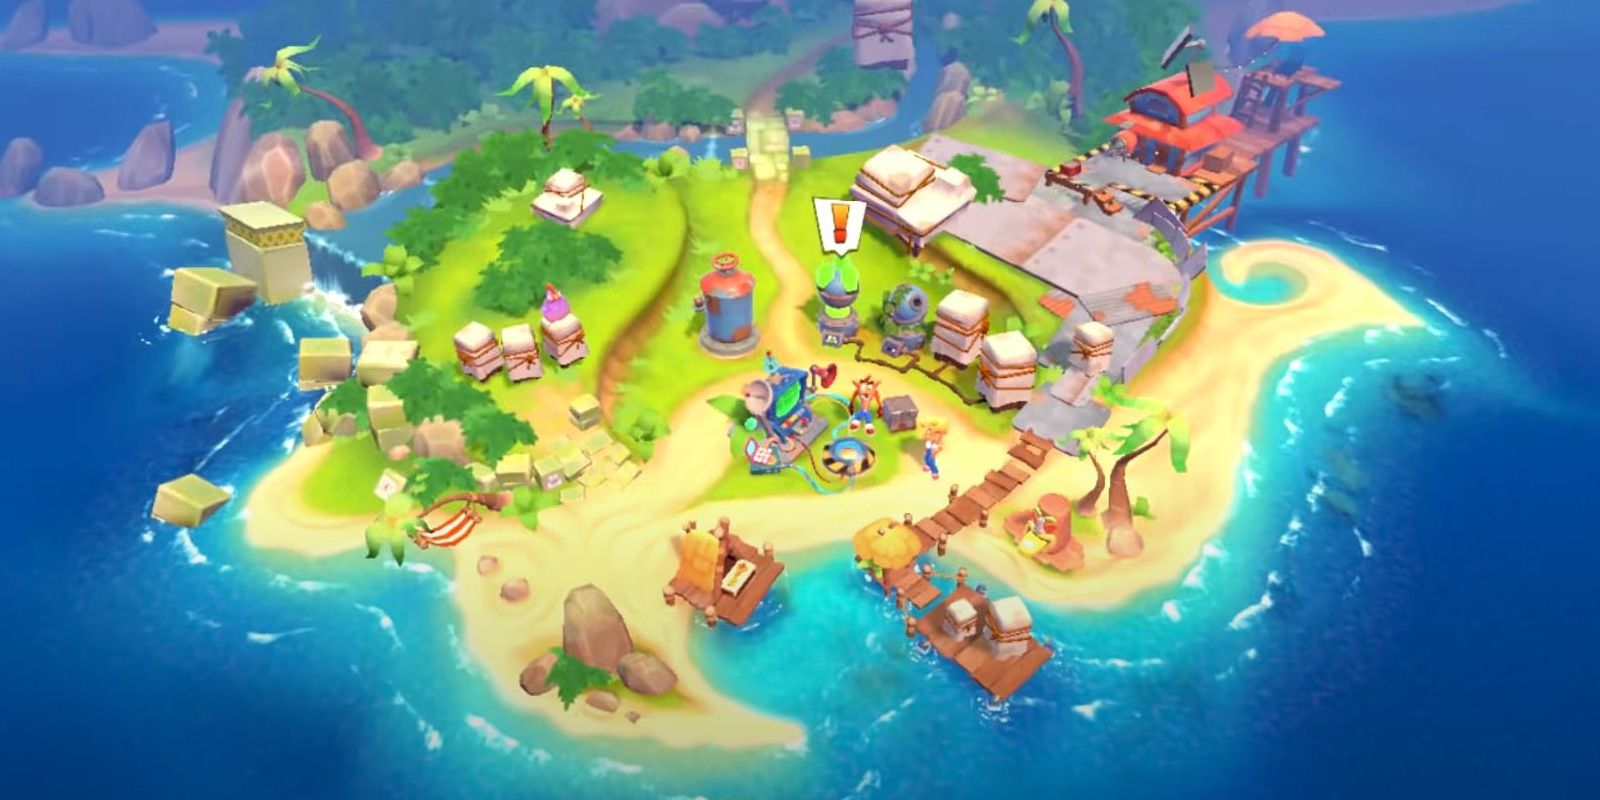 Crash Bandicool Wumpa Island